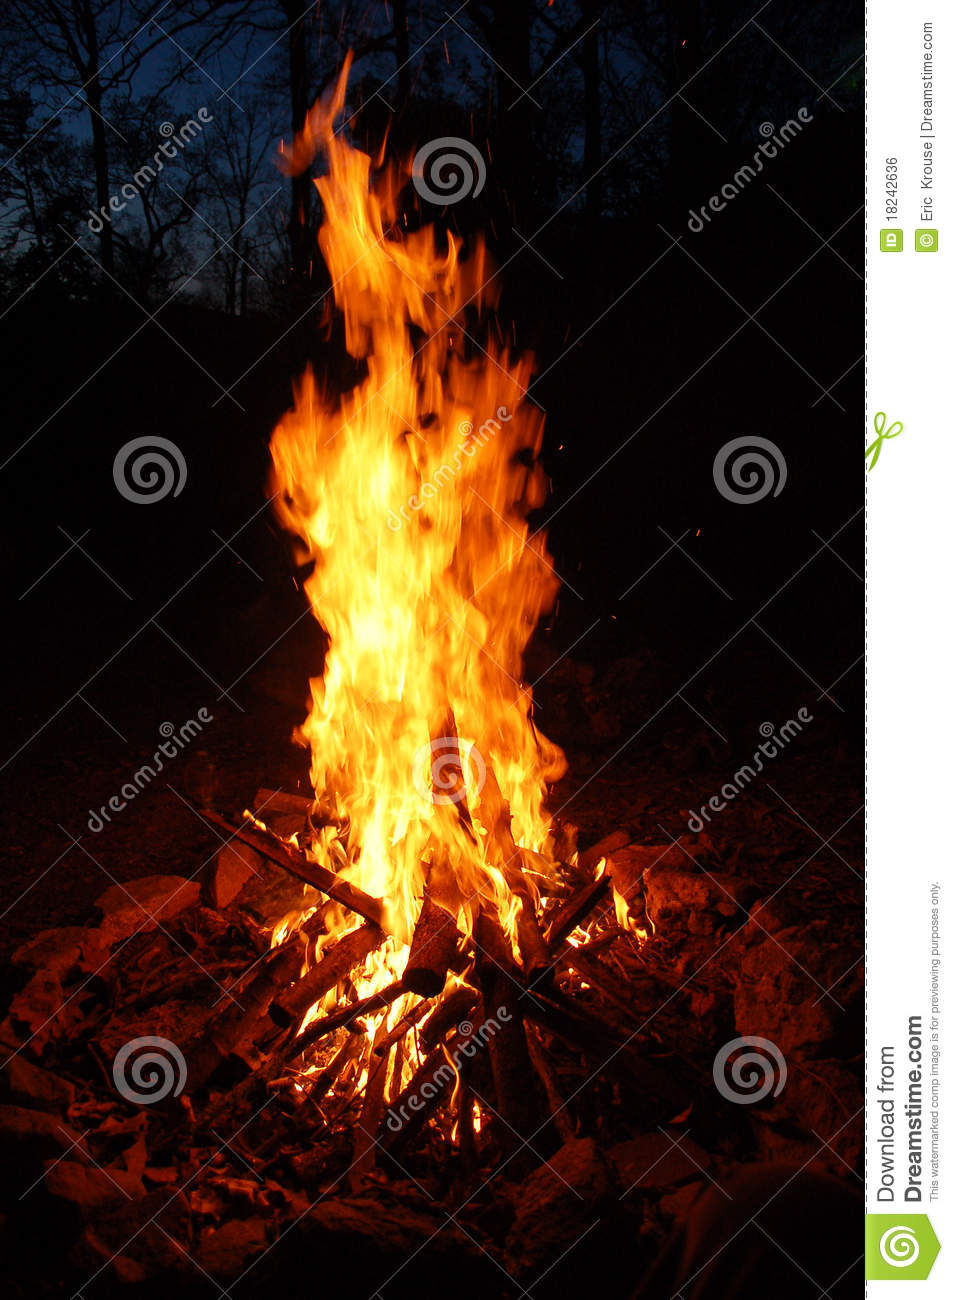 Campfire Royalty Free Stock Image   Image  18242636